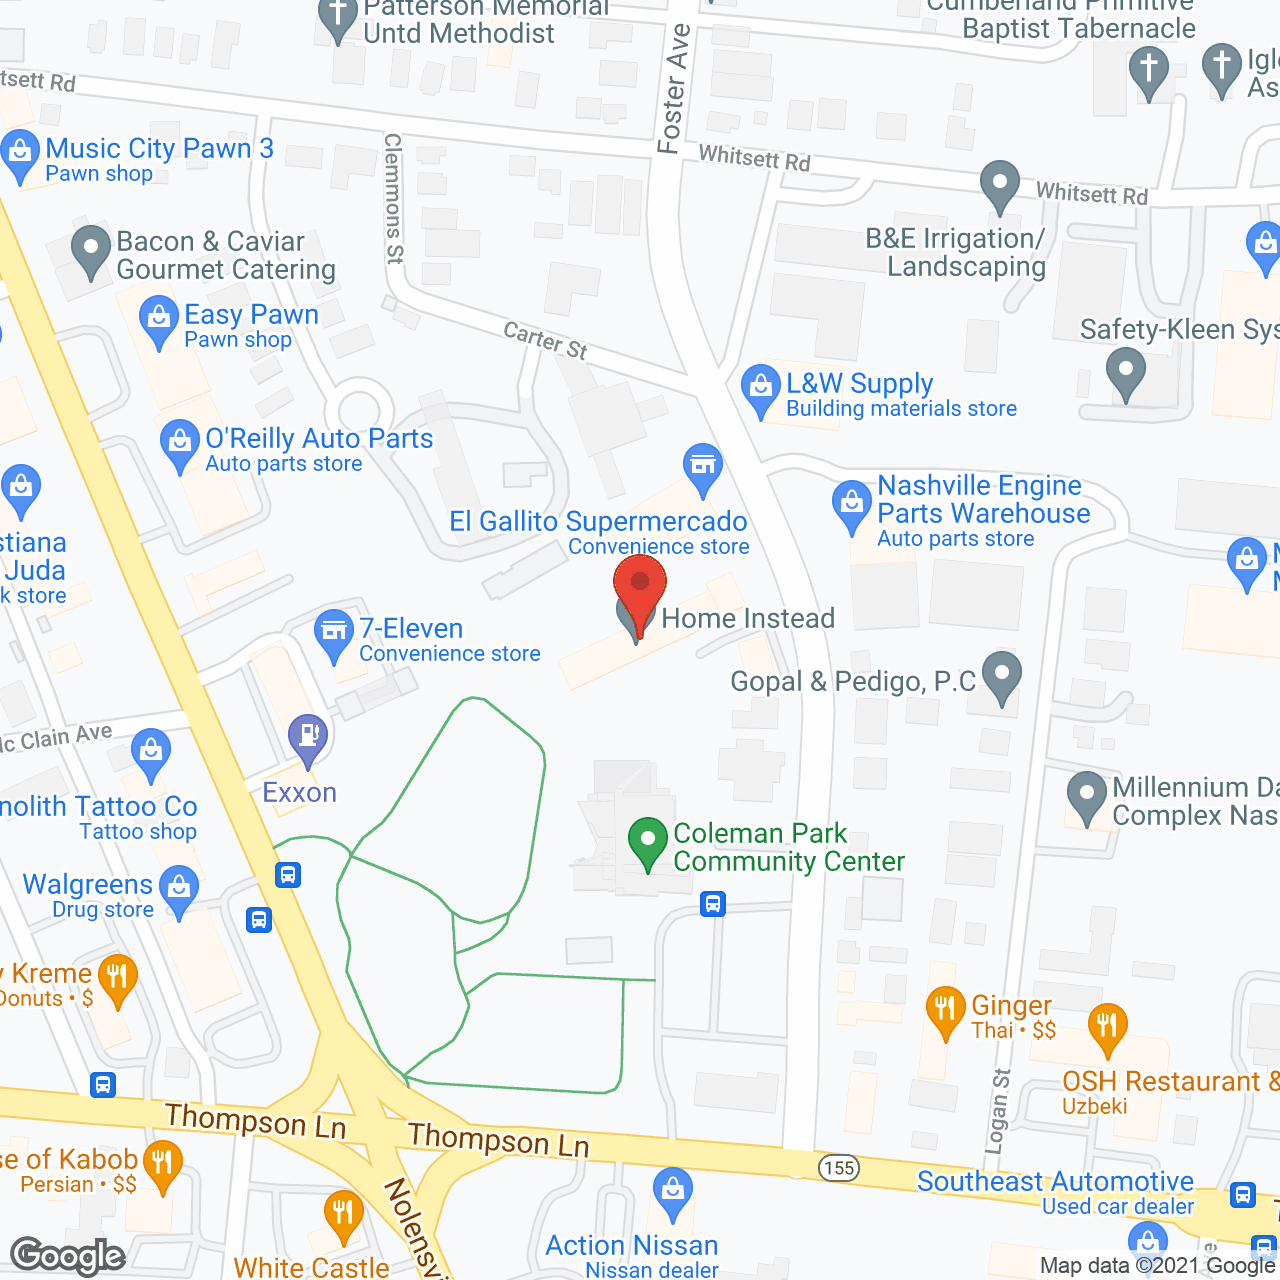 Home Instead - Nashville, TN in google map